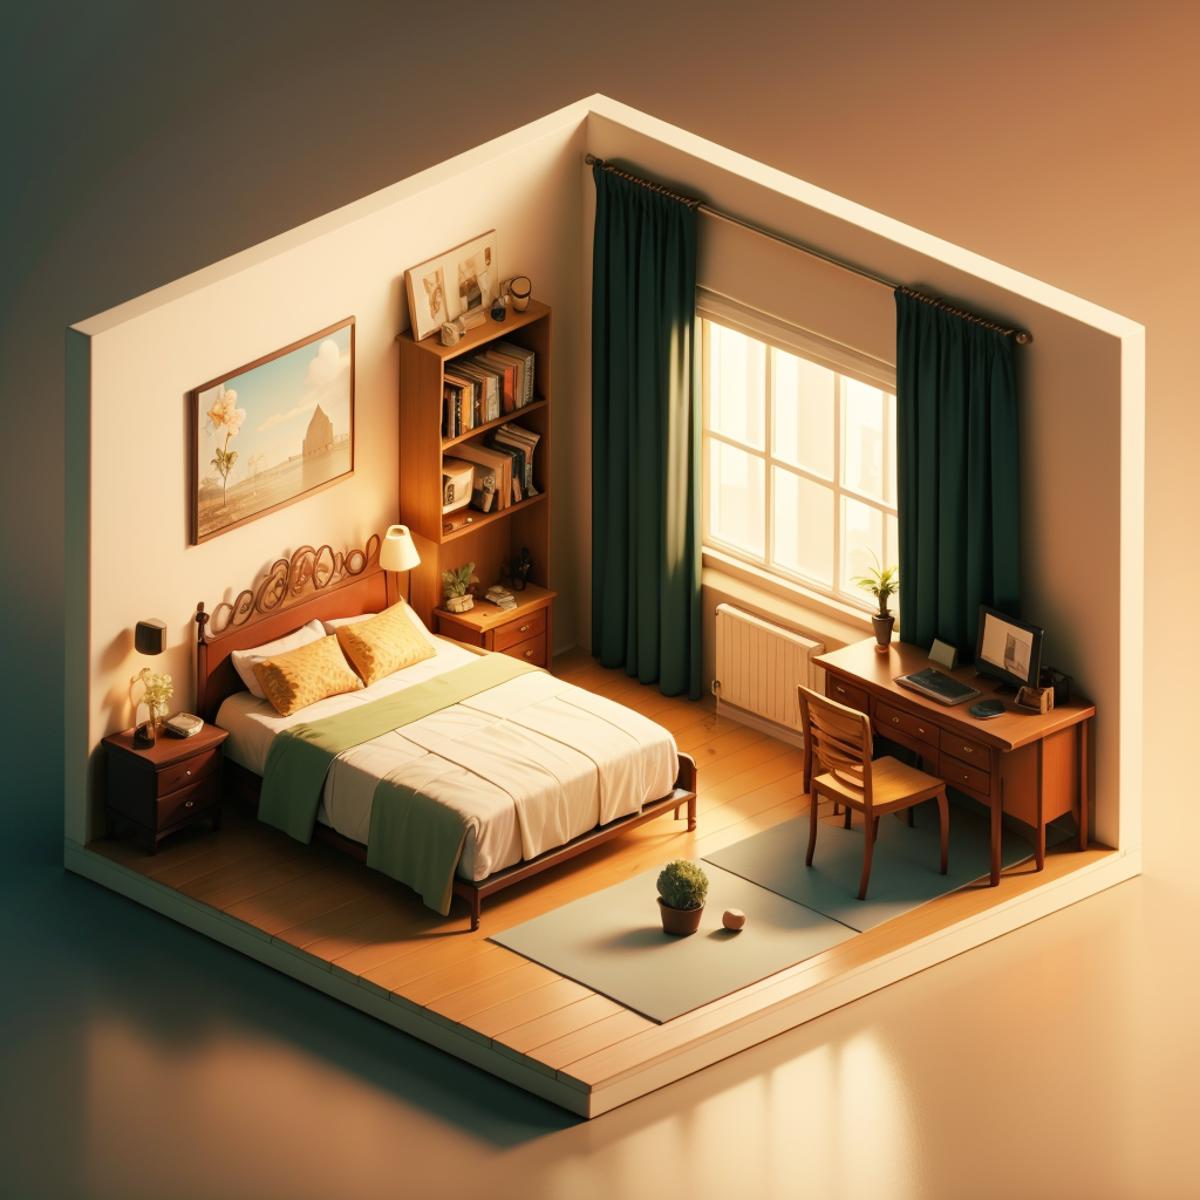 3d room blender image by afei520